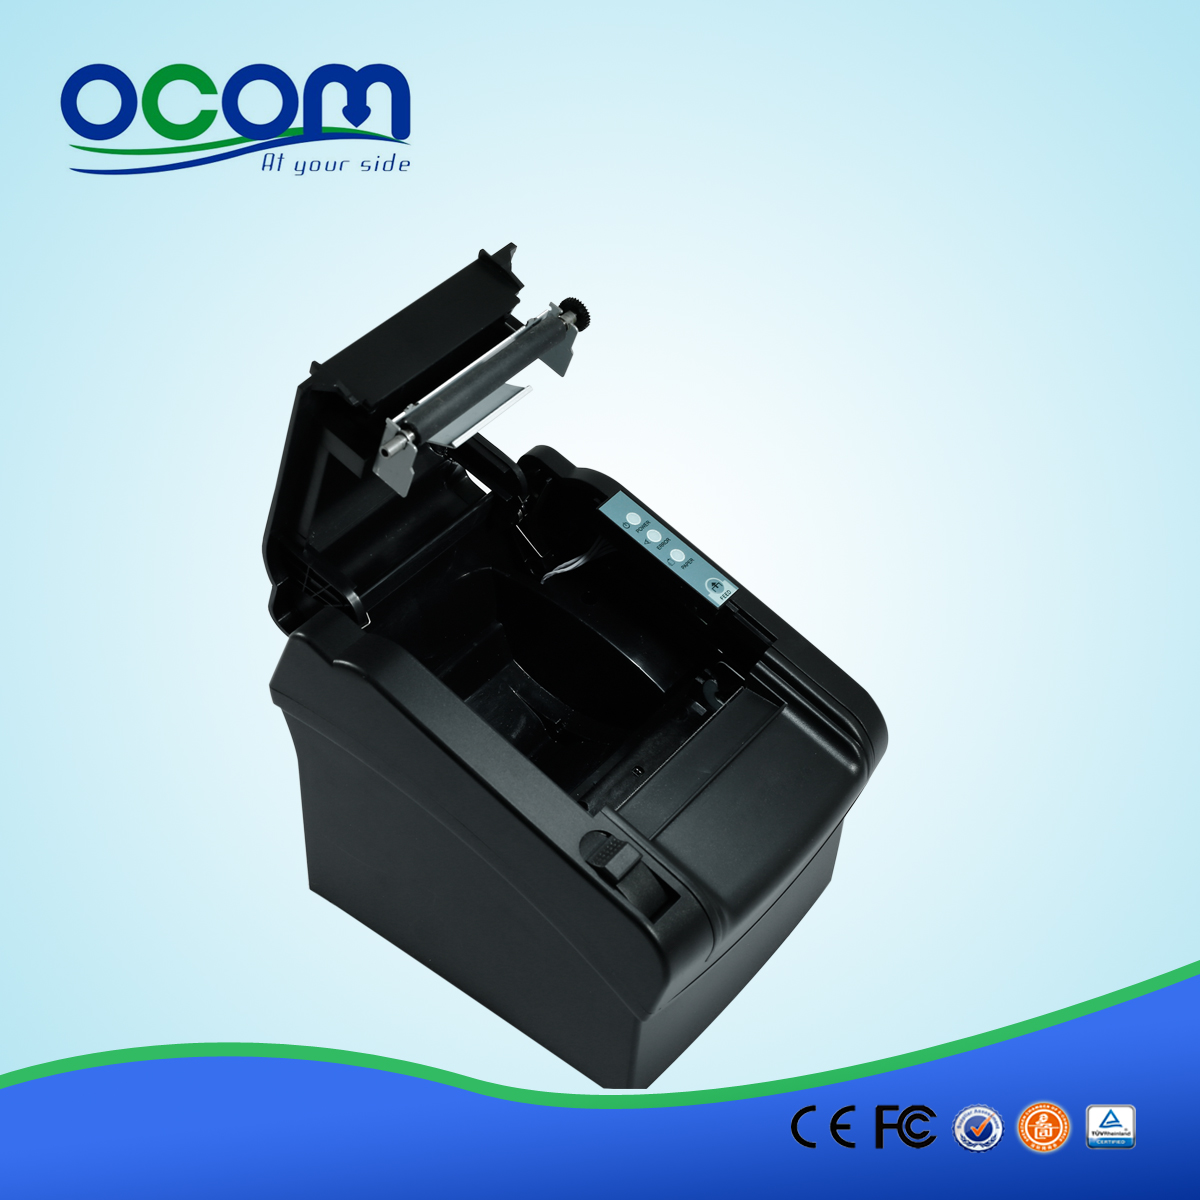 80mm 热敏打印机热条码打印机价格 (OCPP-802)